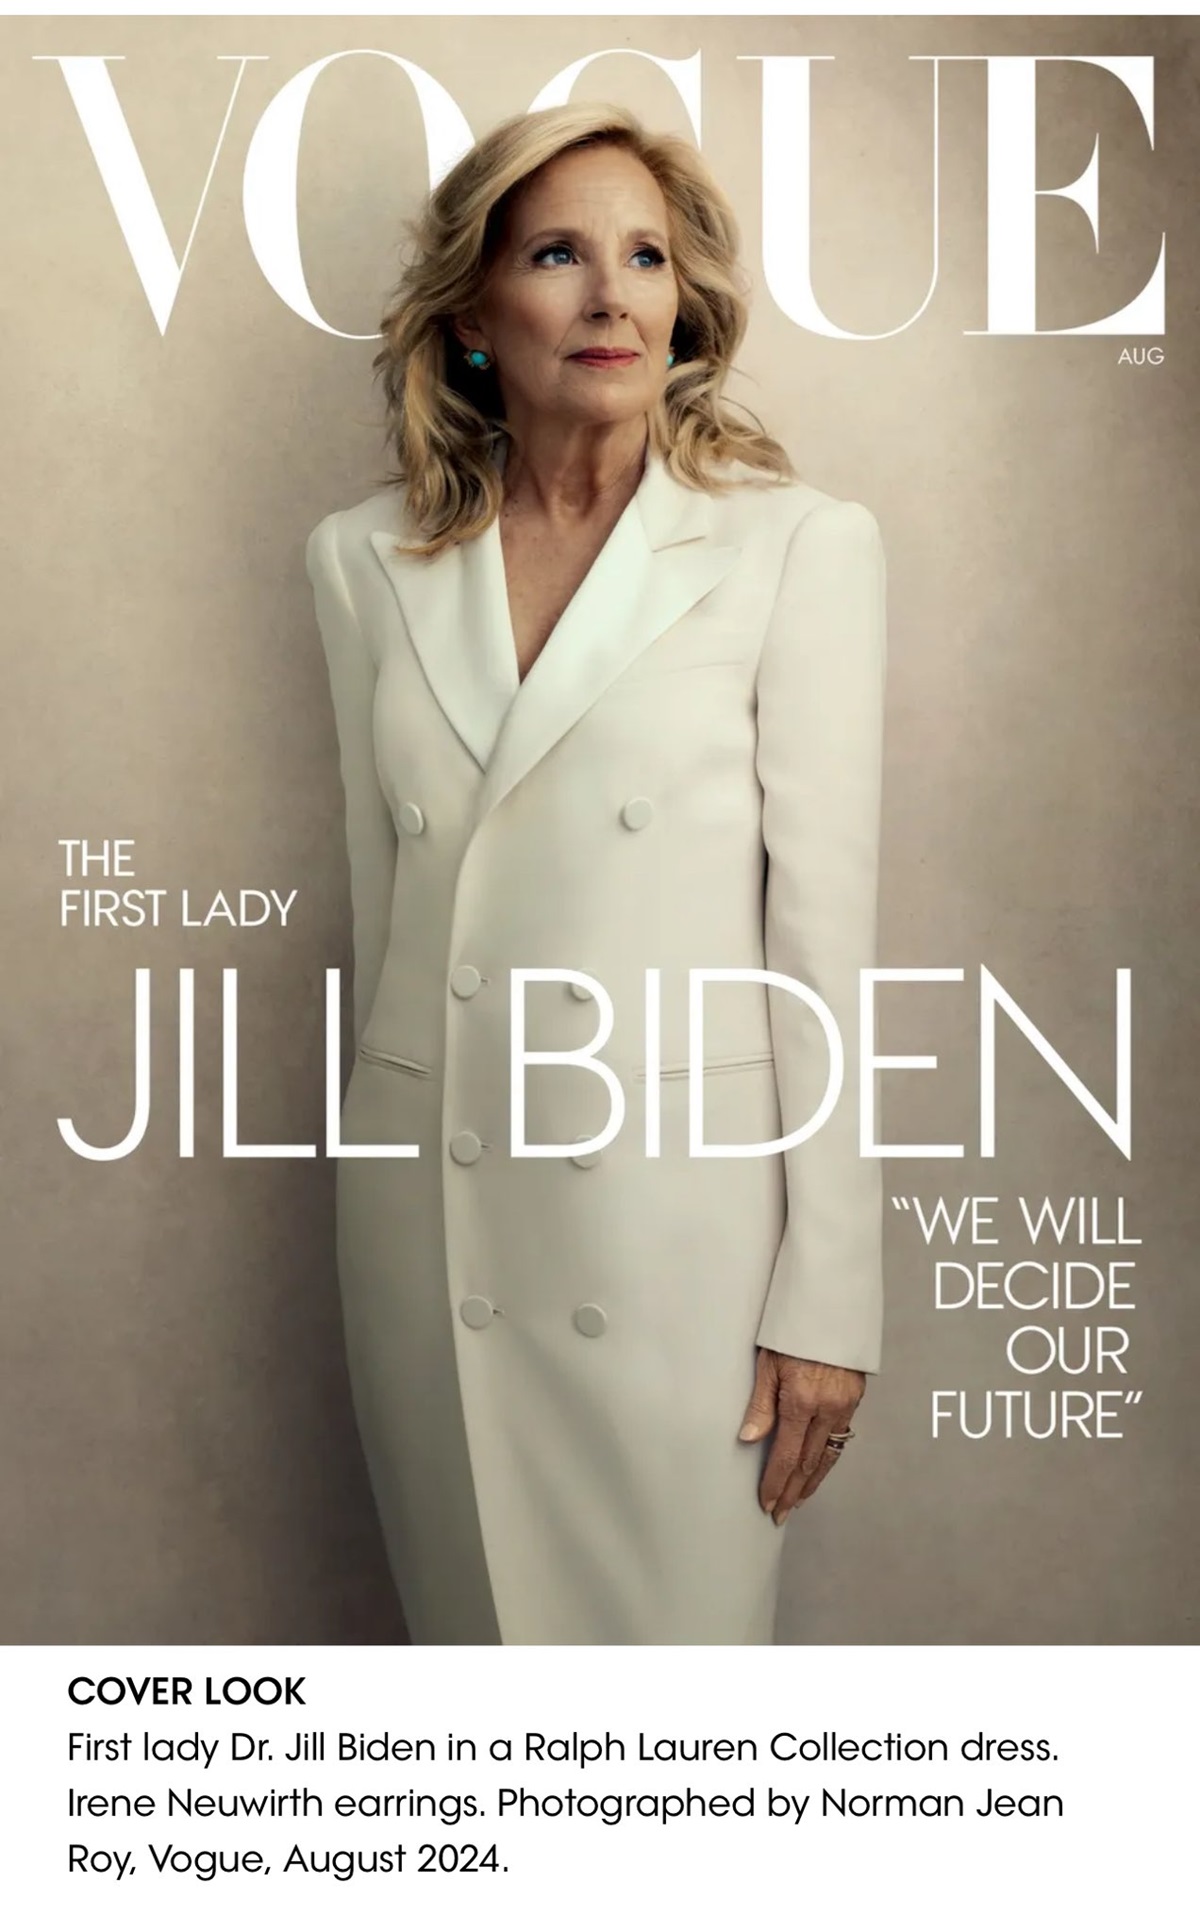 Jill Biden en la portada de Vogue; una primera dama que cobra protagonismo